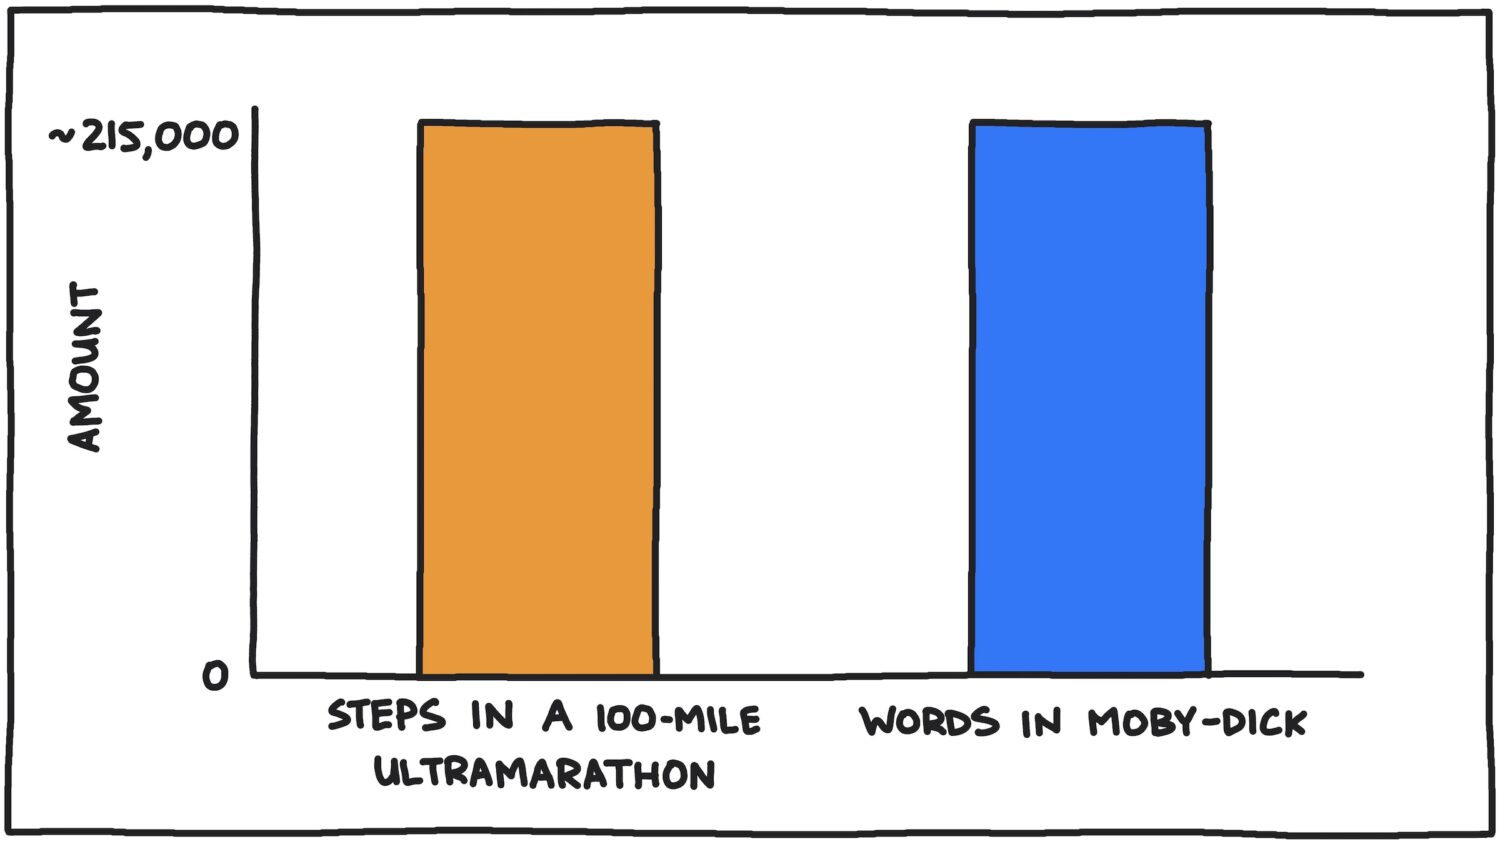 moby dick vs 100-mile ultramarathon chart